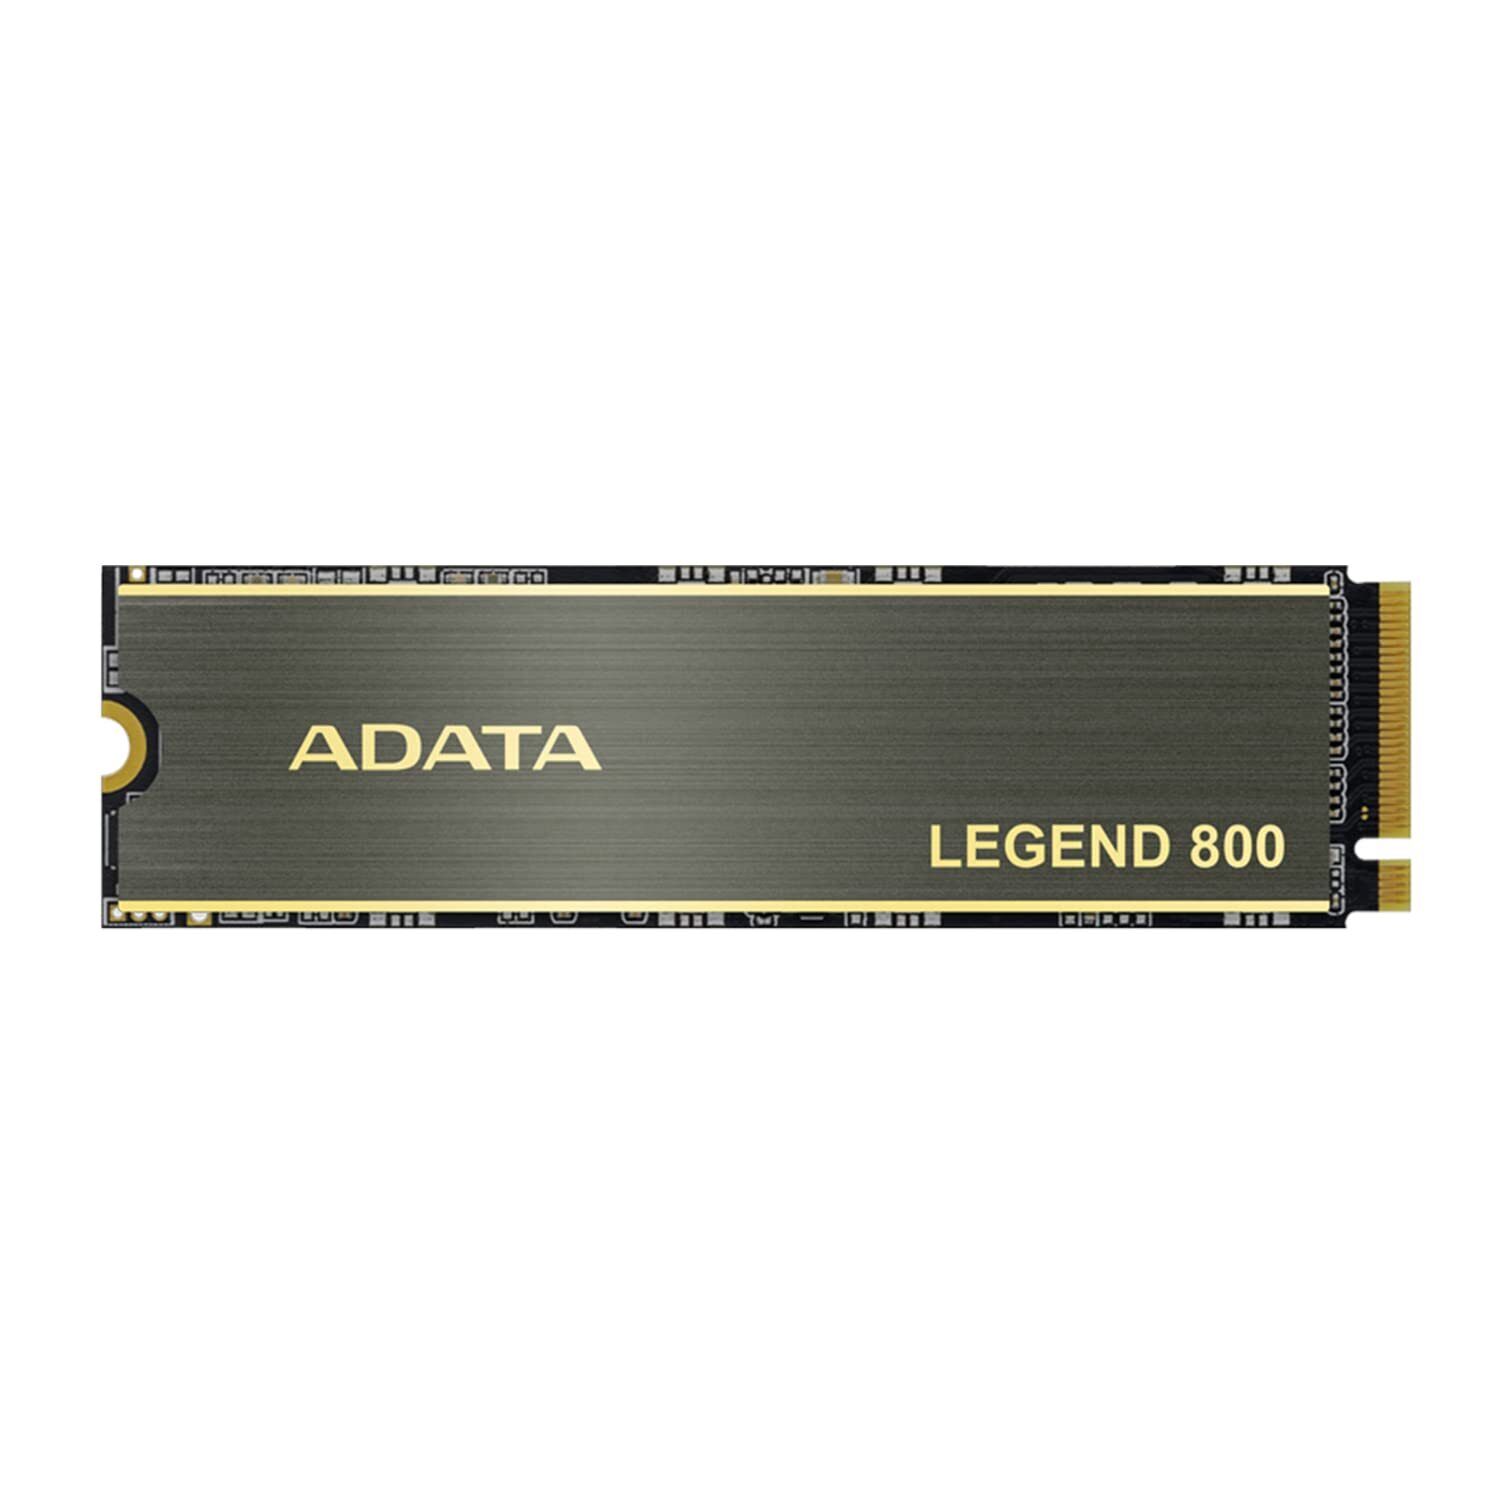 ADATA 1TB SSD Legend 800, NVMe PCIe Gen4 x 4 M.2 2280 Internal Solid State Dri